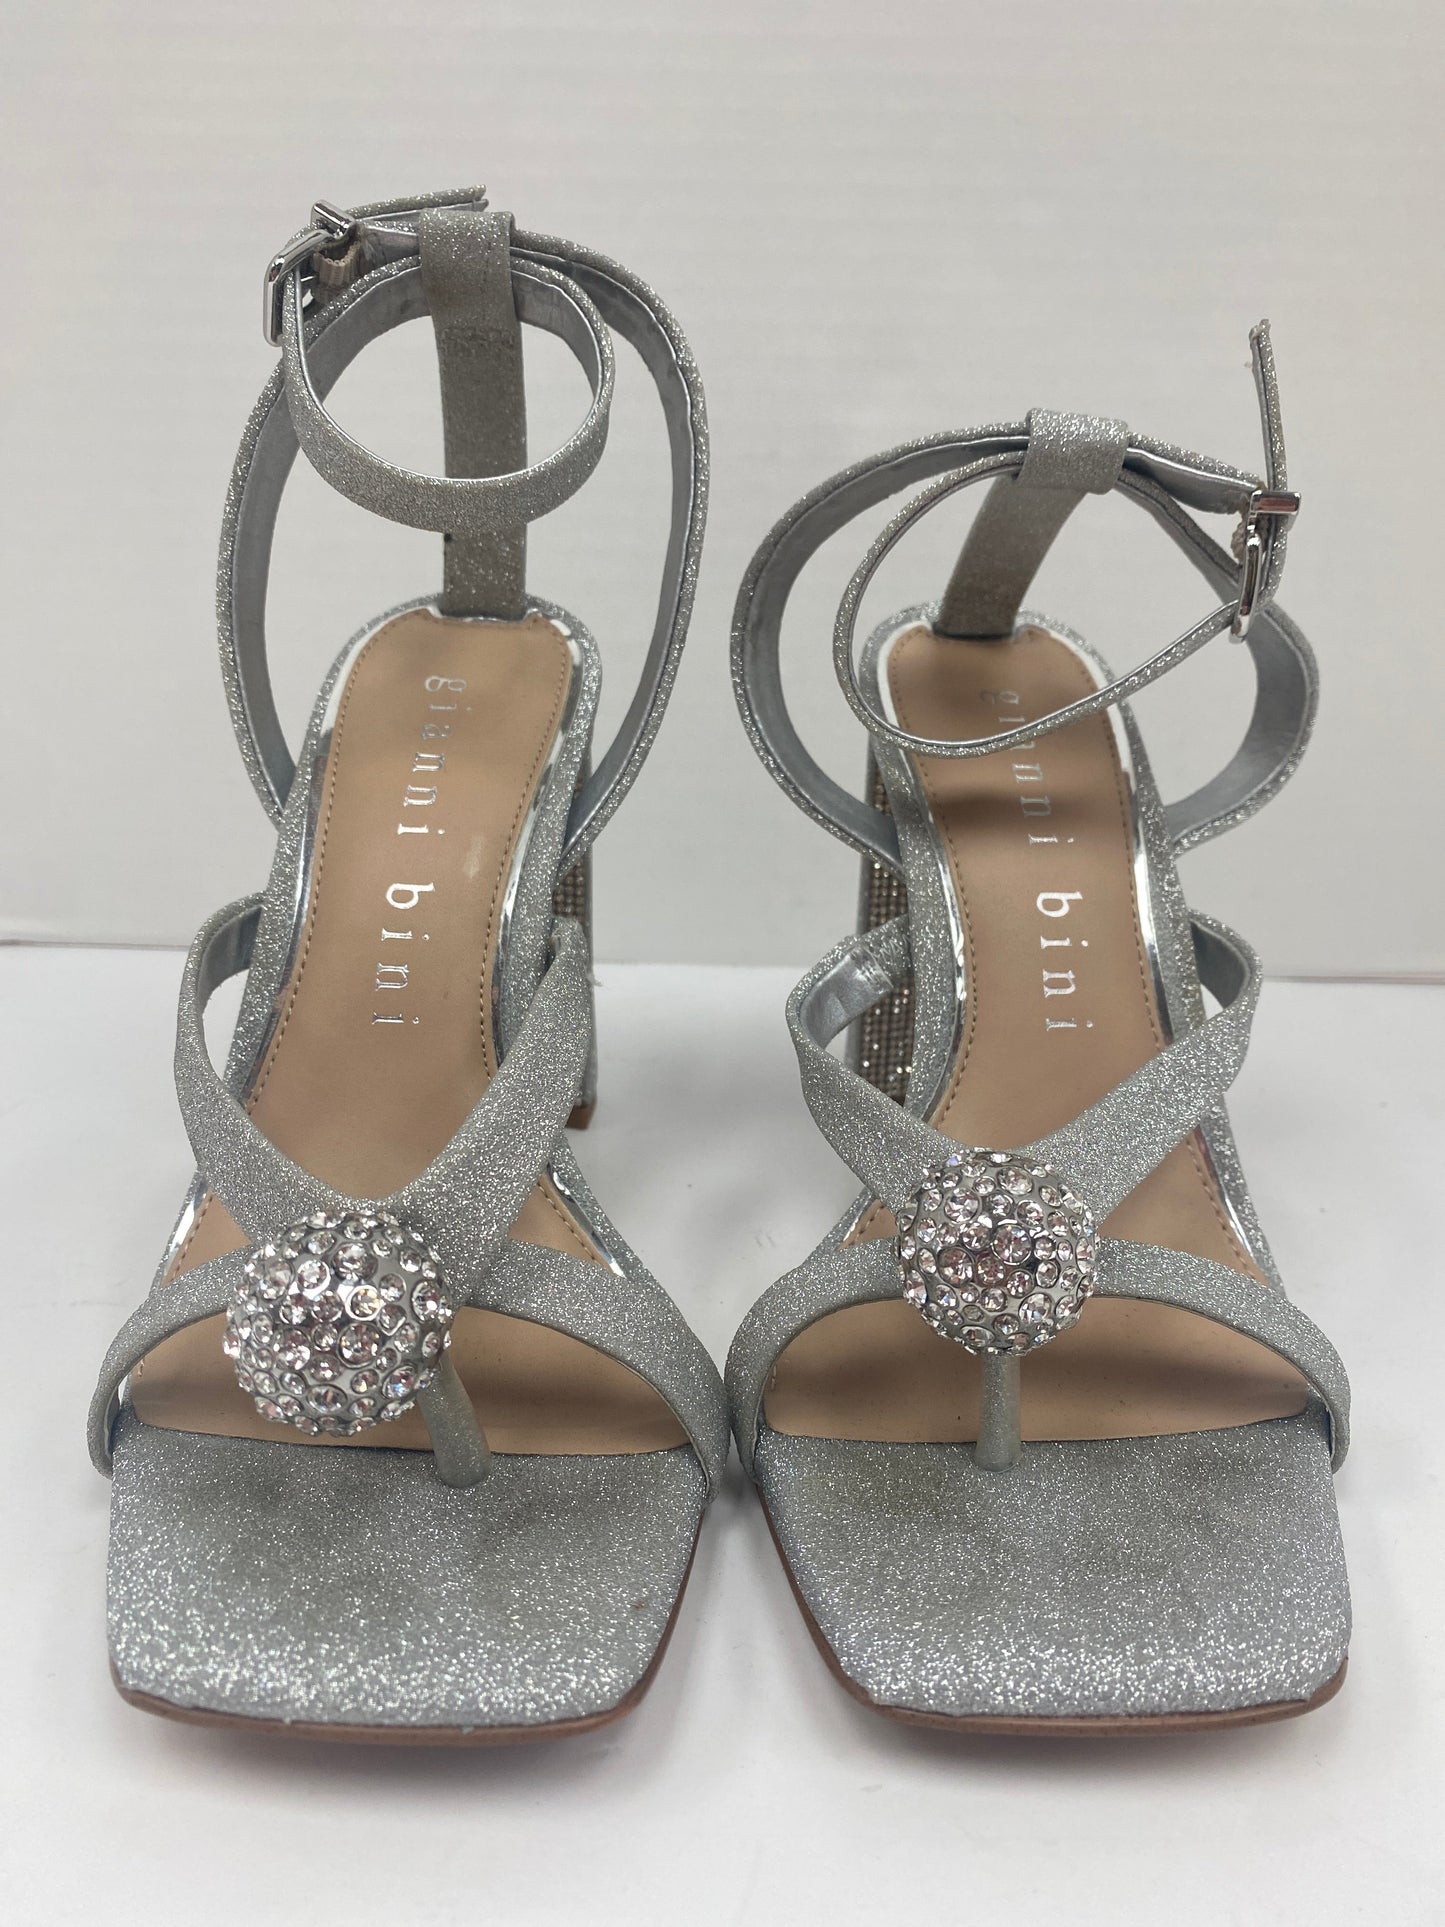 Silver Shoes Heels Block Gianni Bini, Size 7